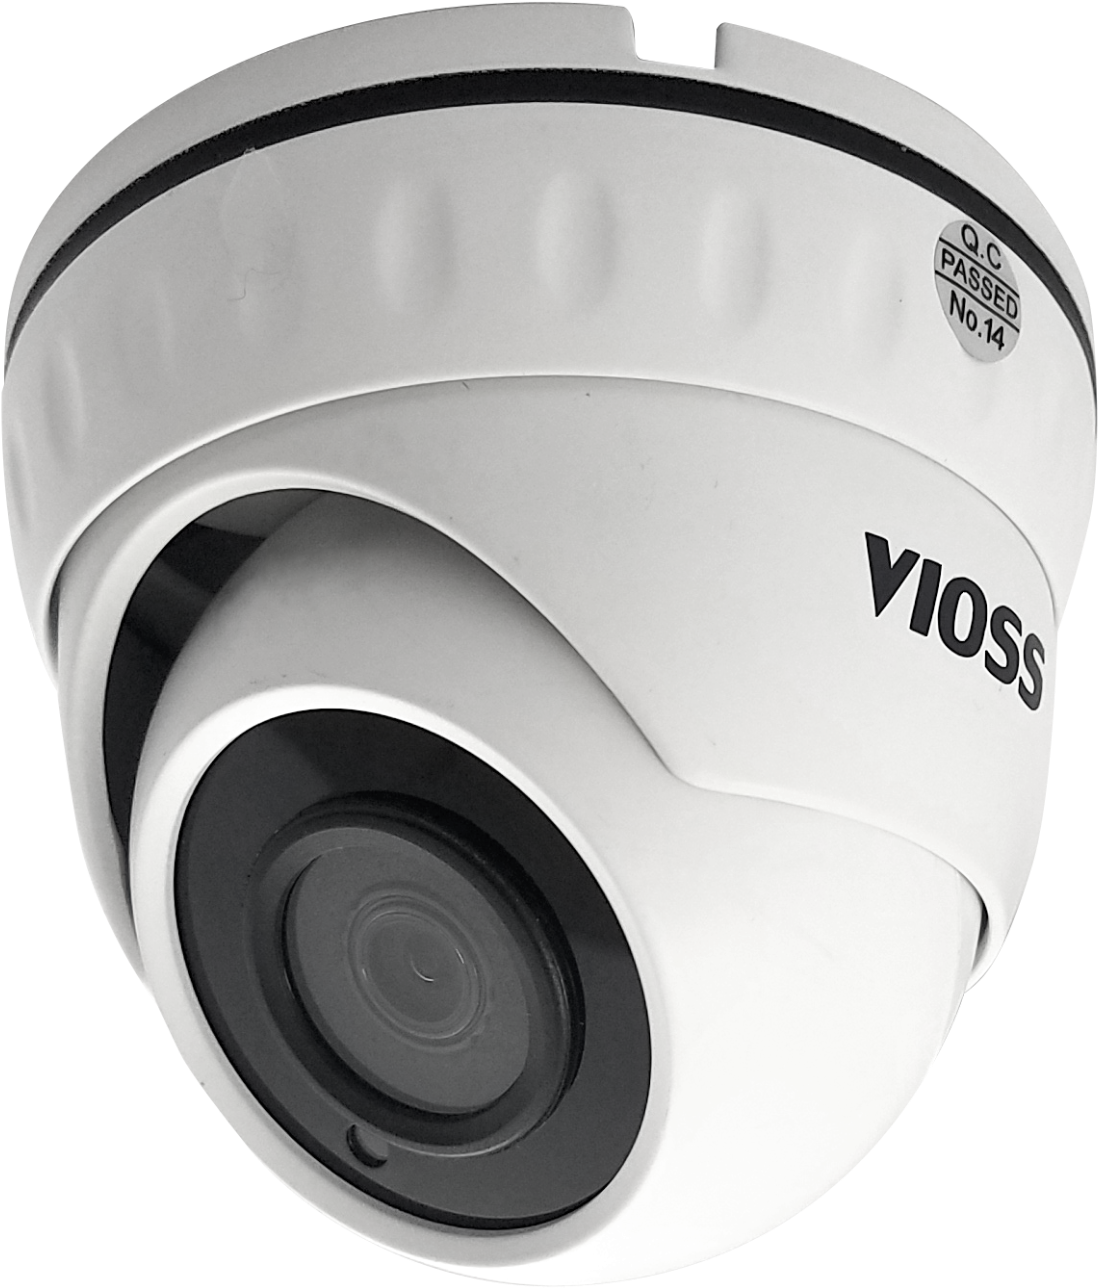 Free Download Surveillance Camera Clipart Camera Lens - Camera Lens (1600x1600), Png Download